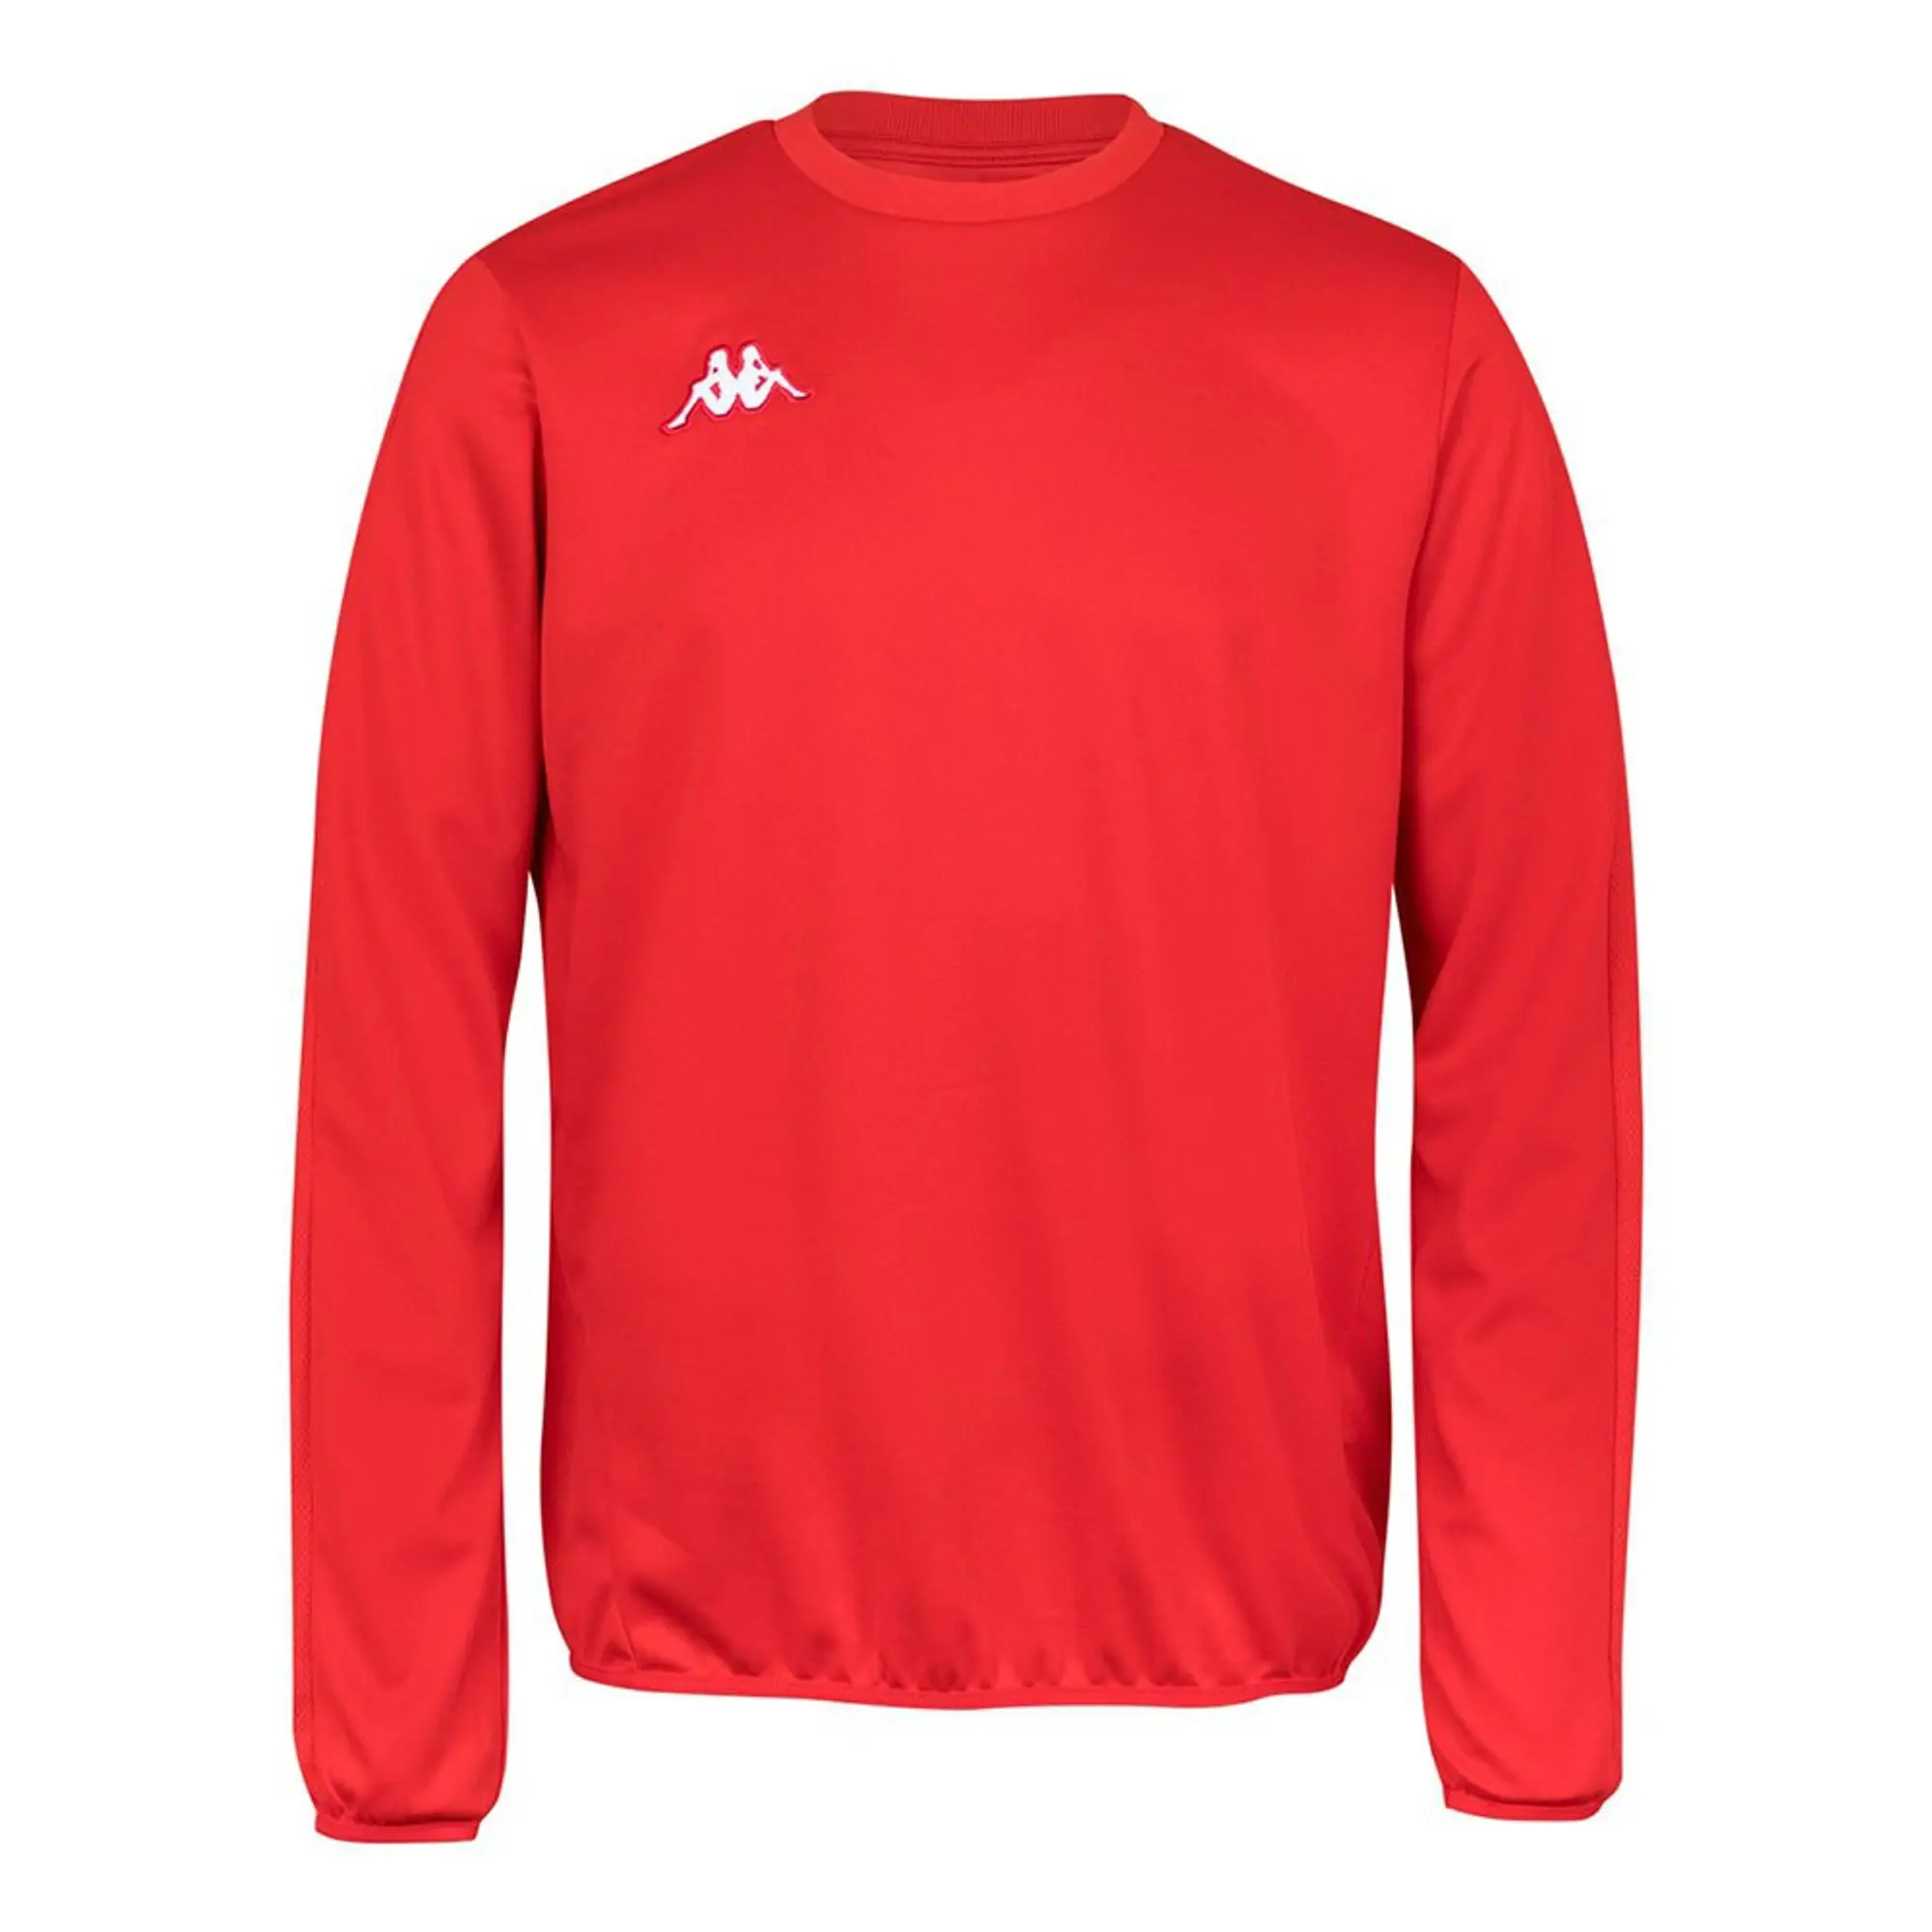 Kappa Talsano Sweatshirt  - Red